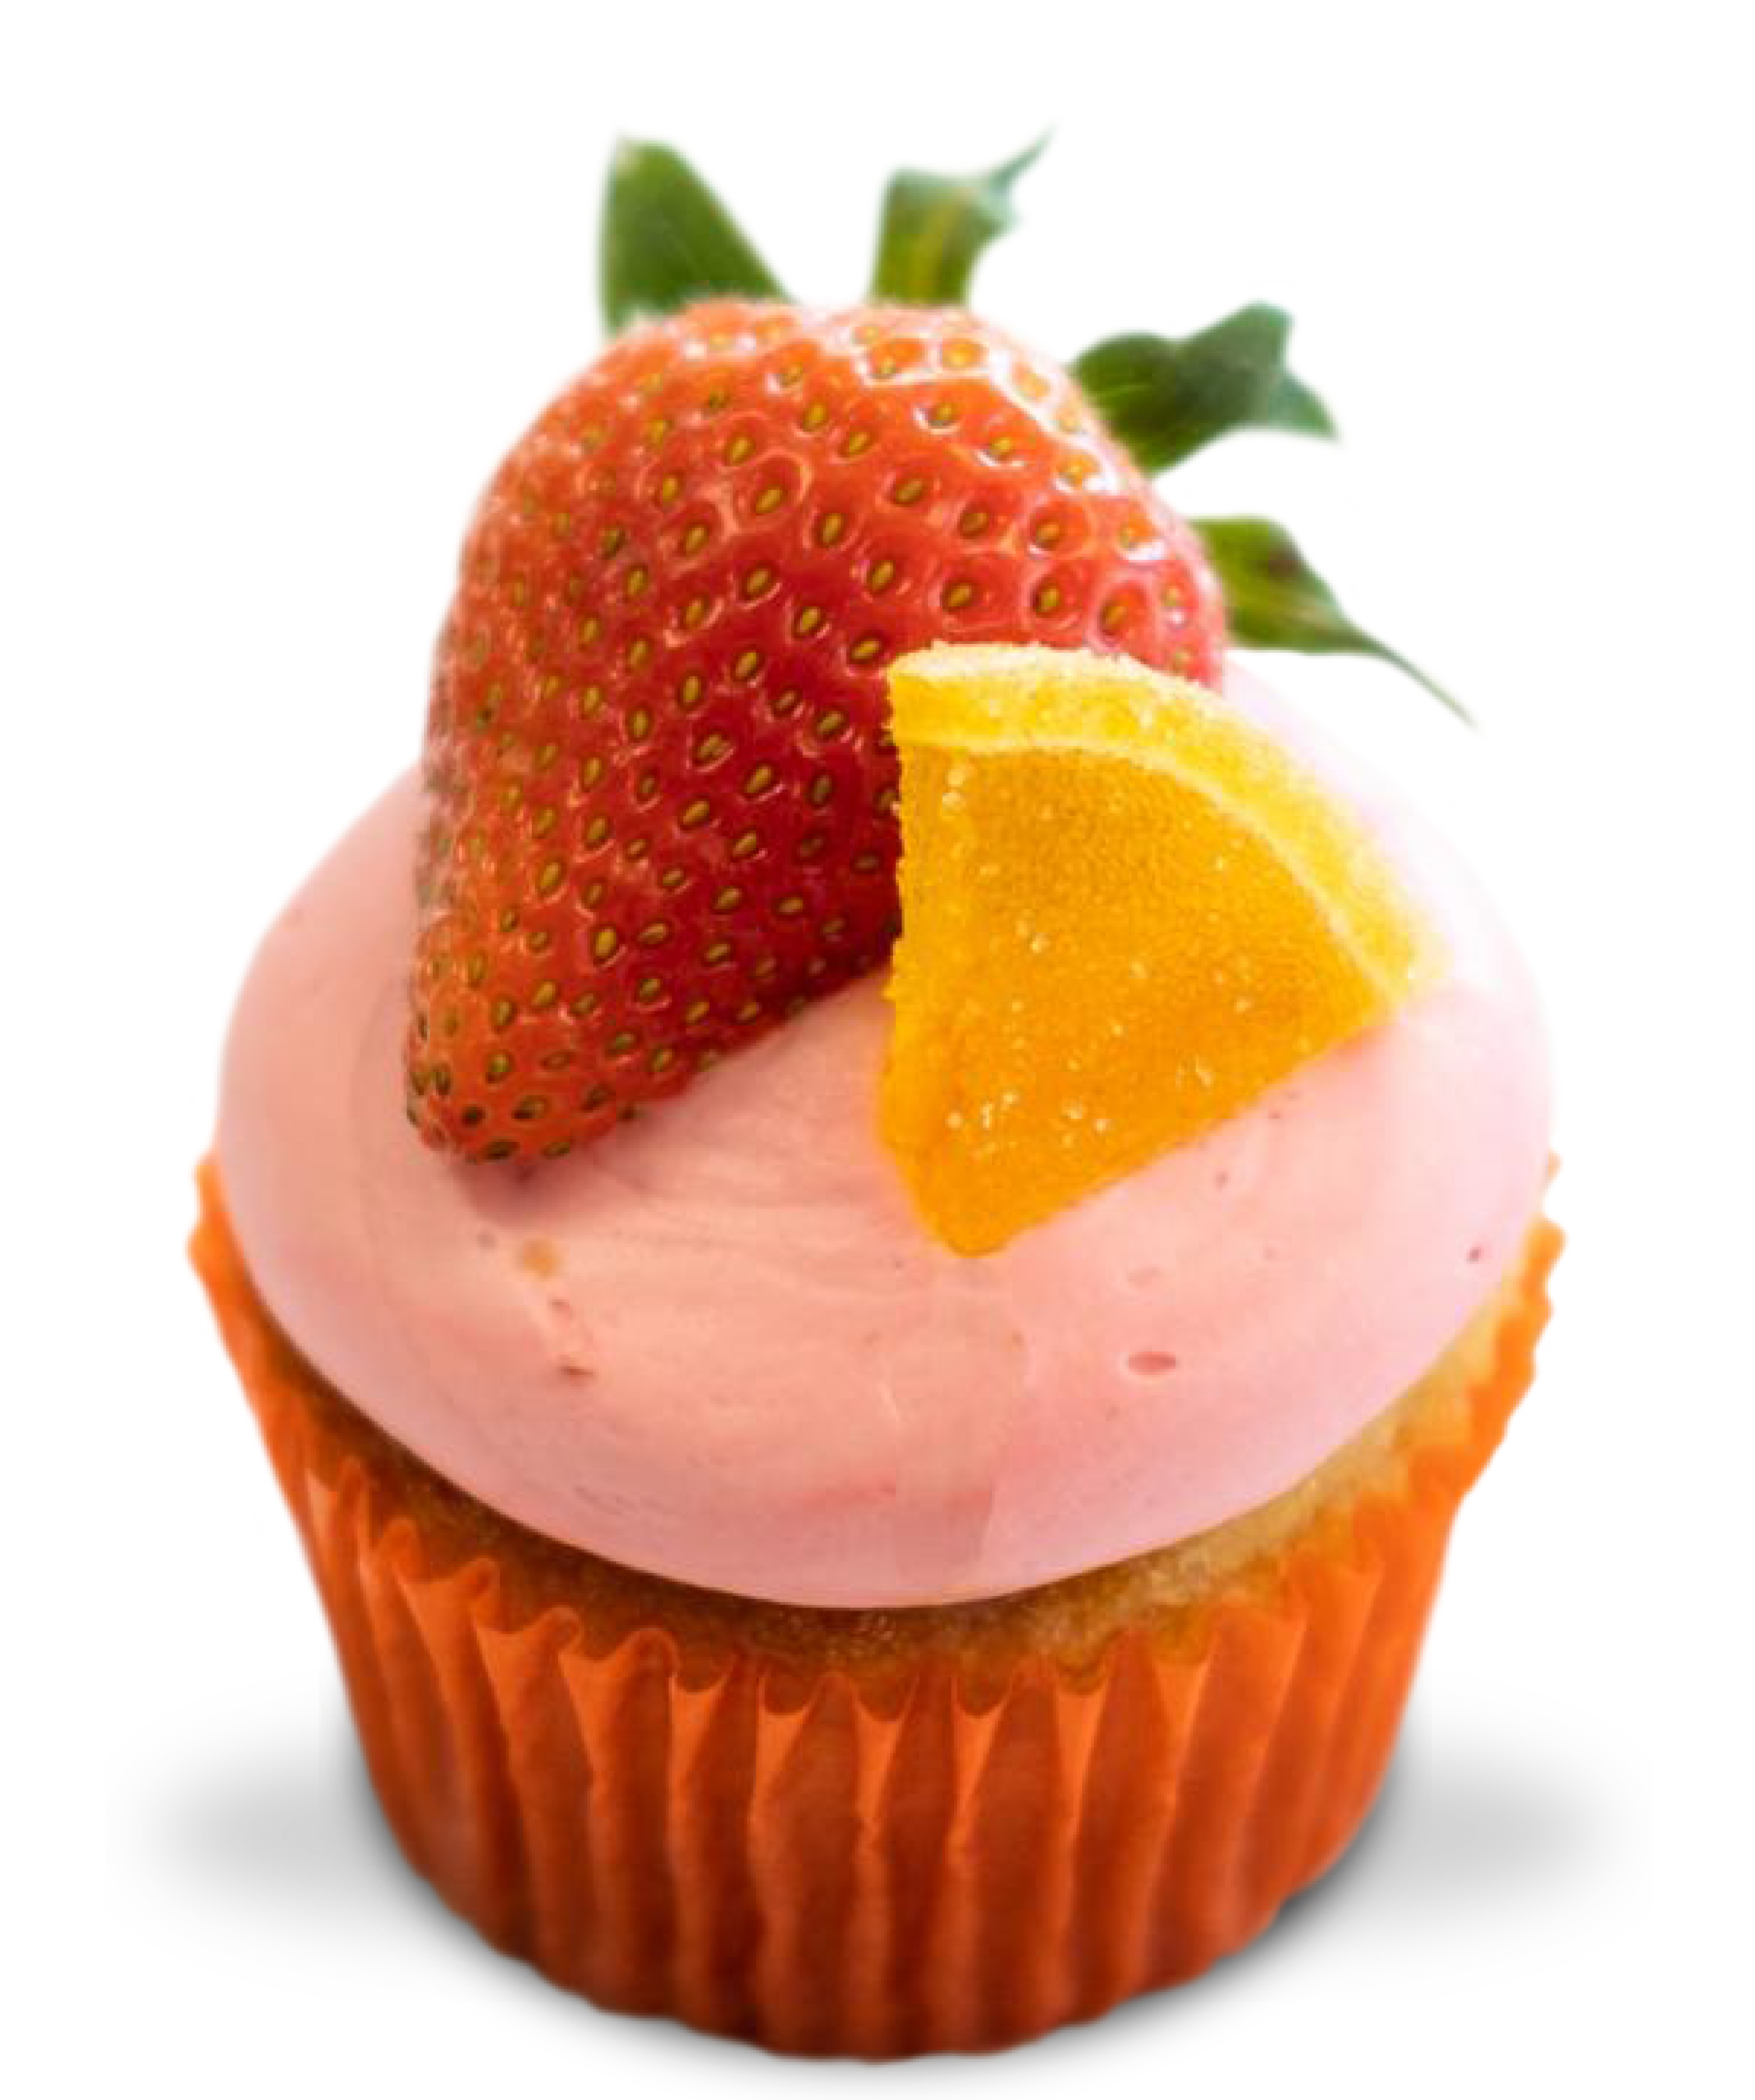 Strawberry Lemonade Cupcake